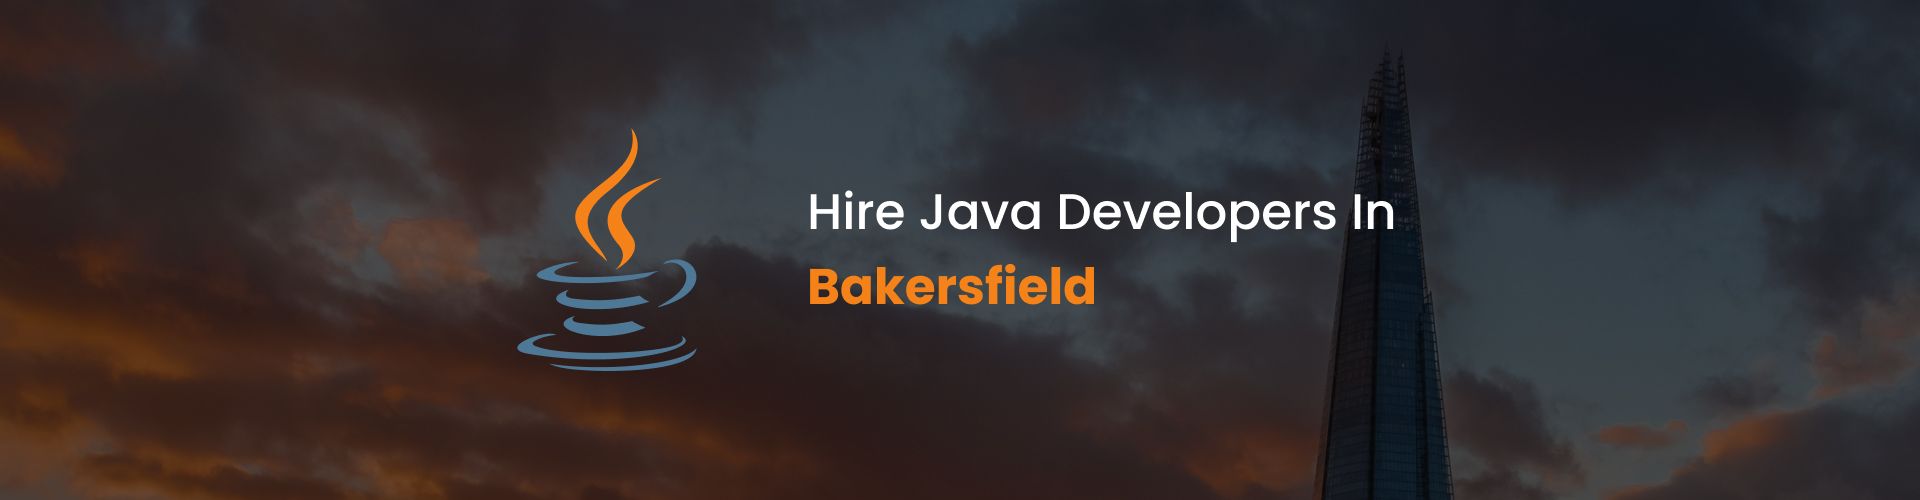 hire java developers in bakersfield